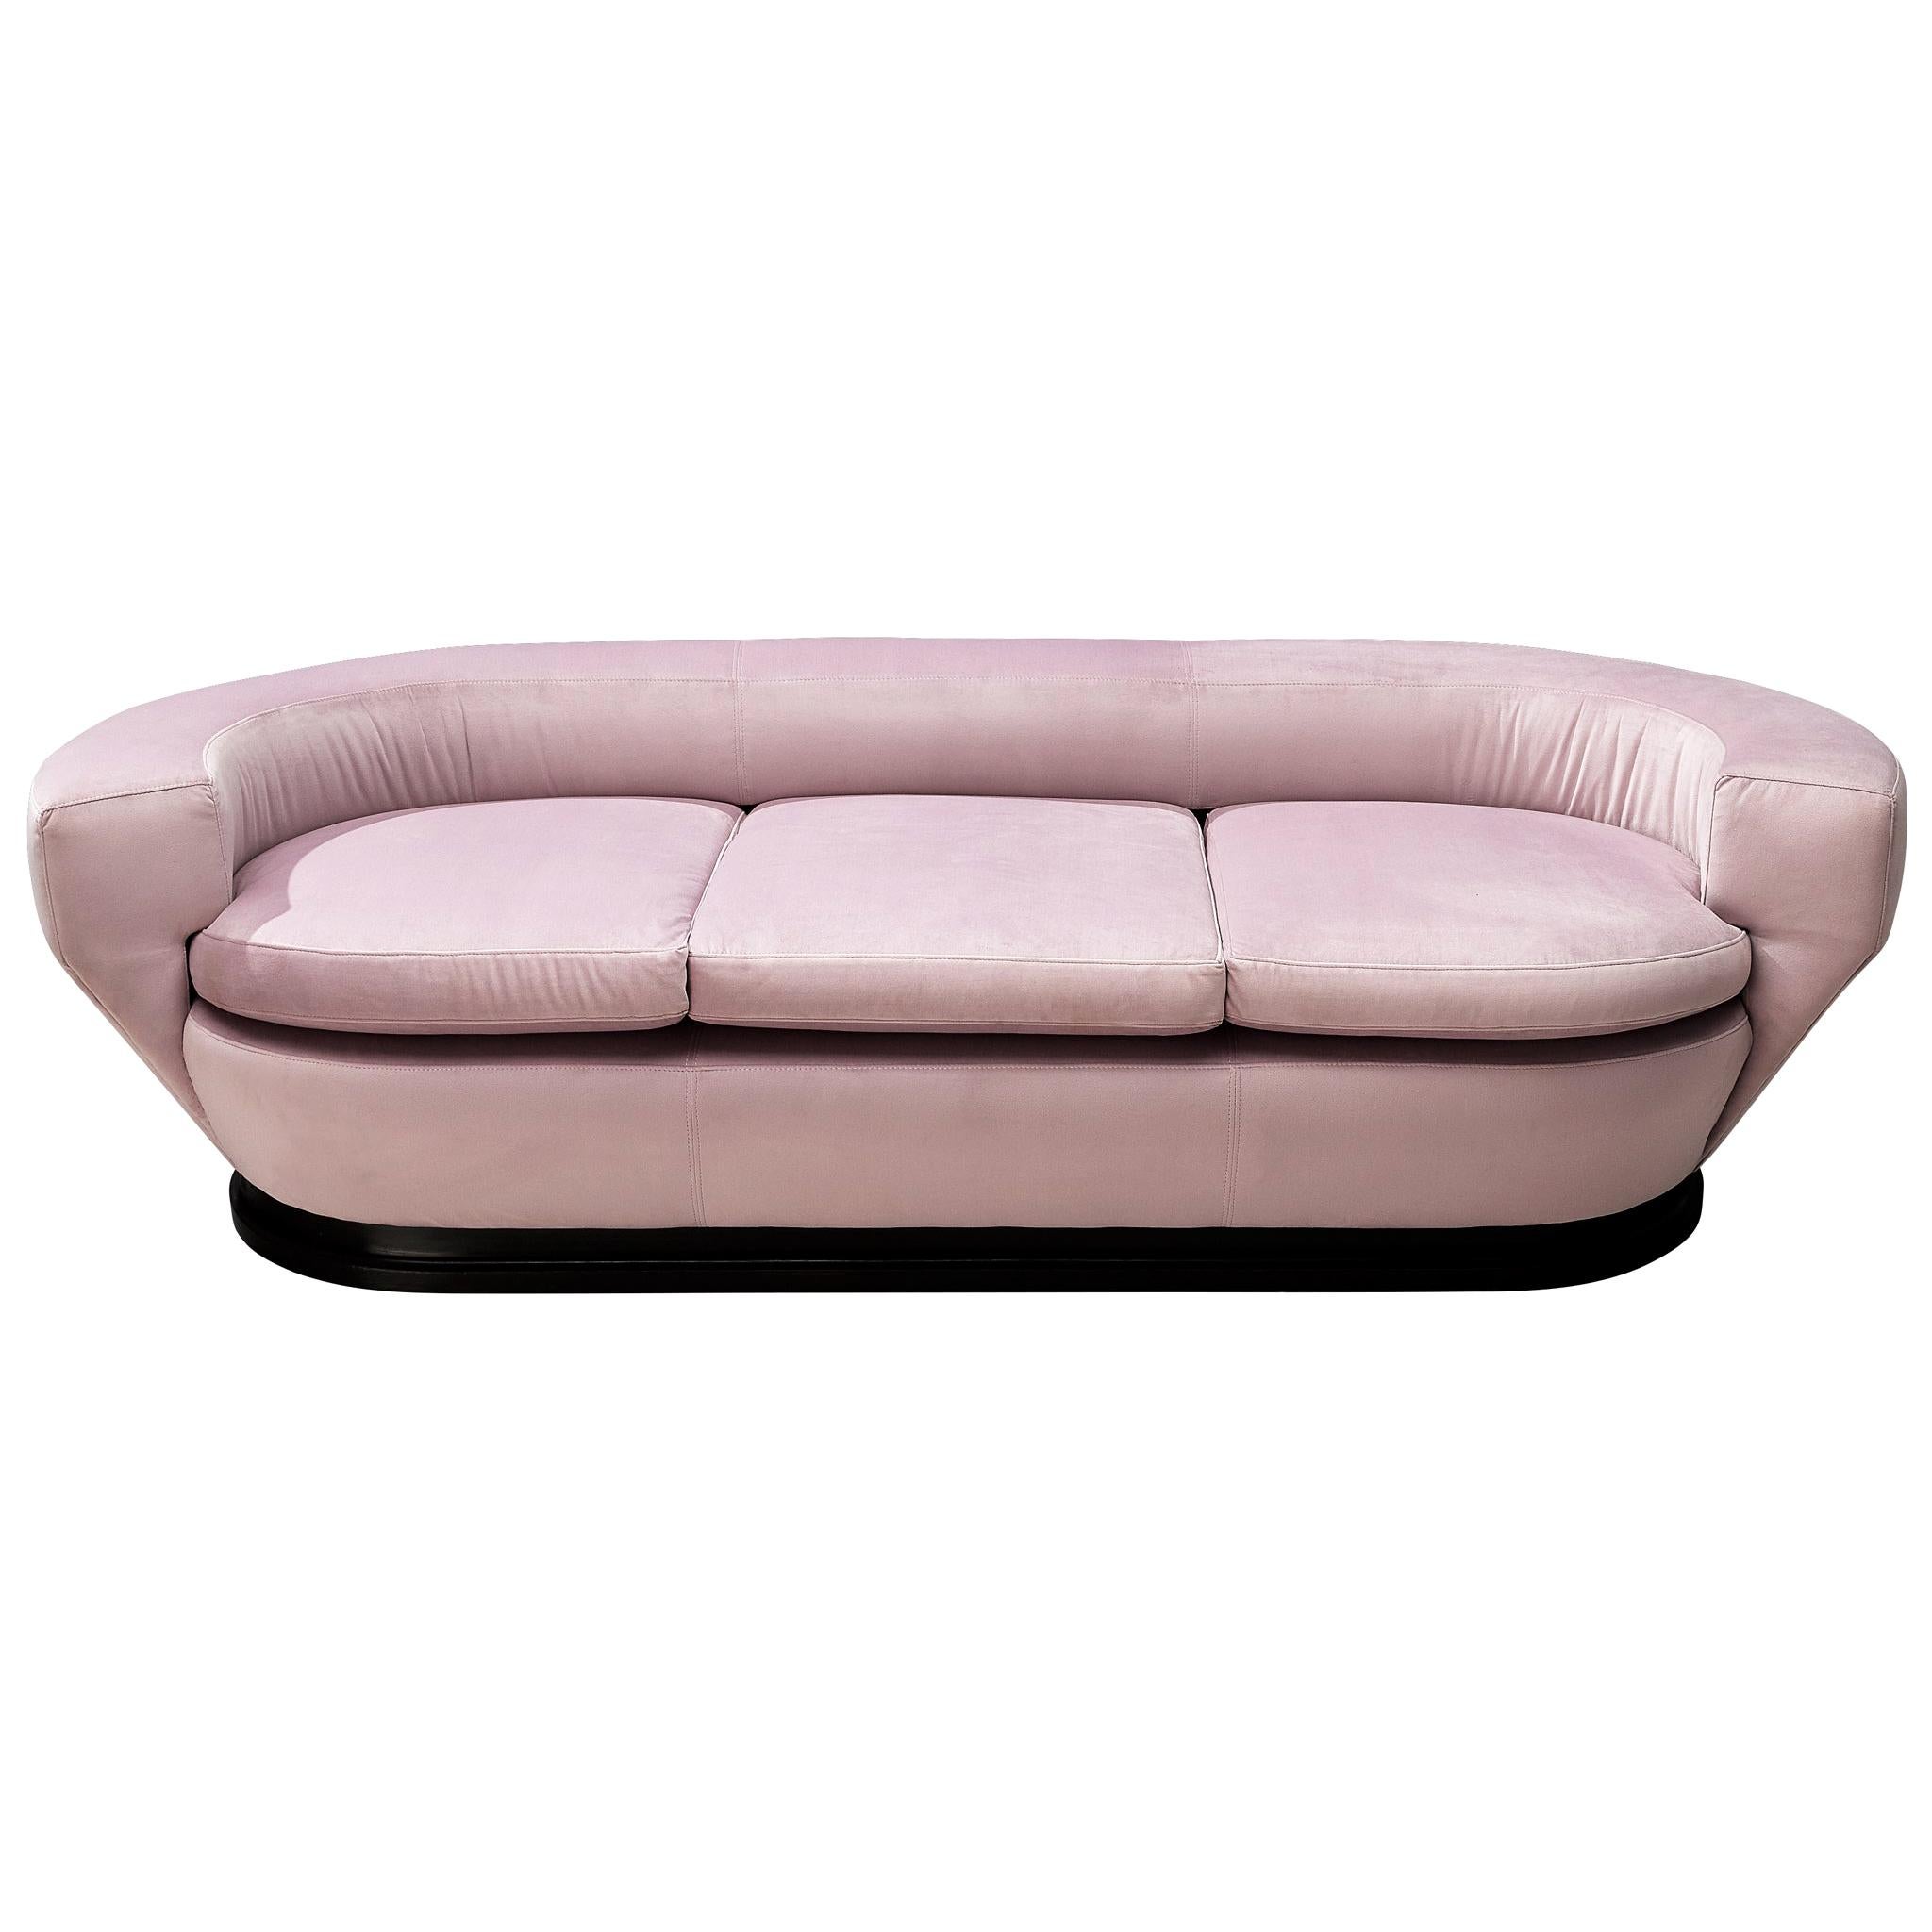 Italian Sofa in Soft Pink Velour Upholstery